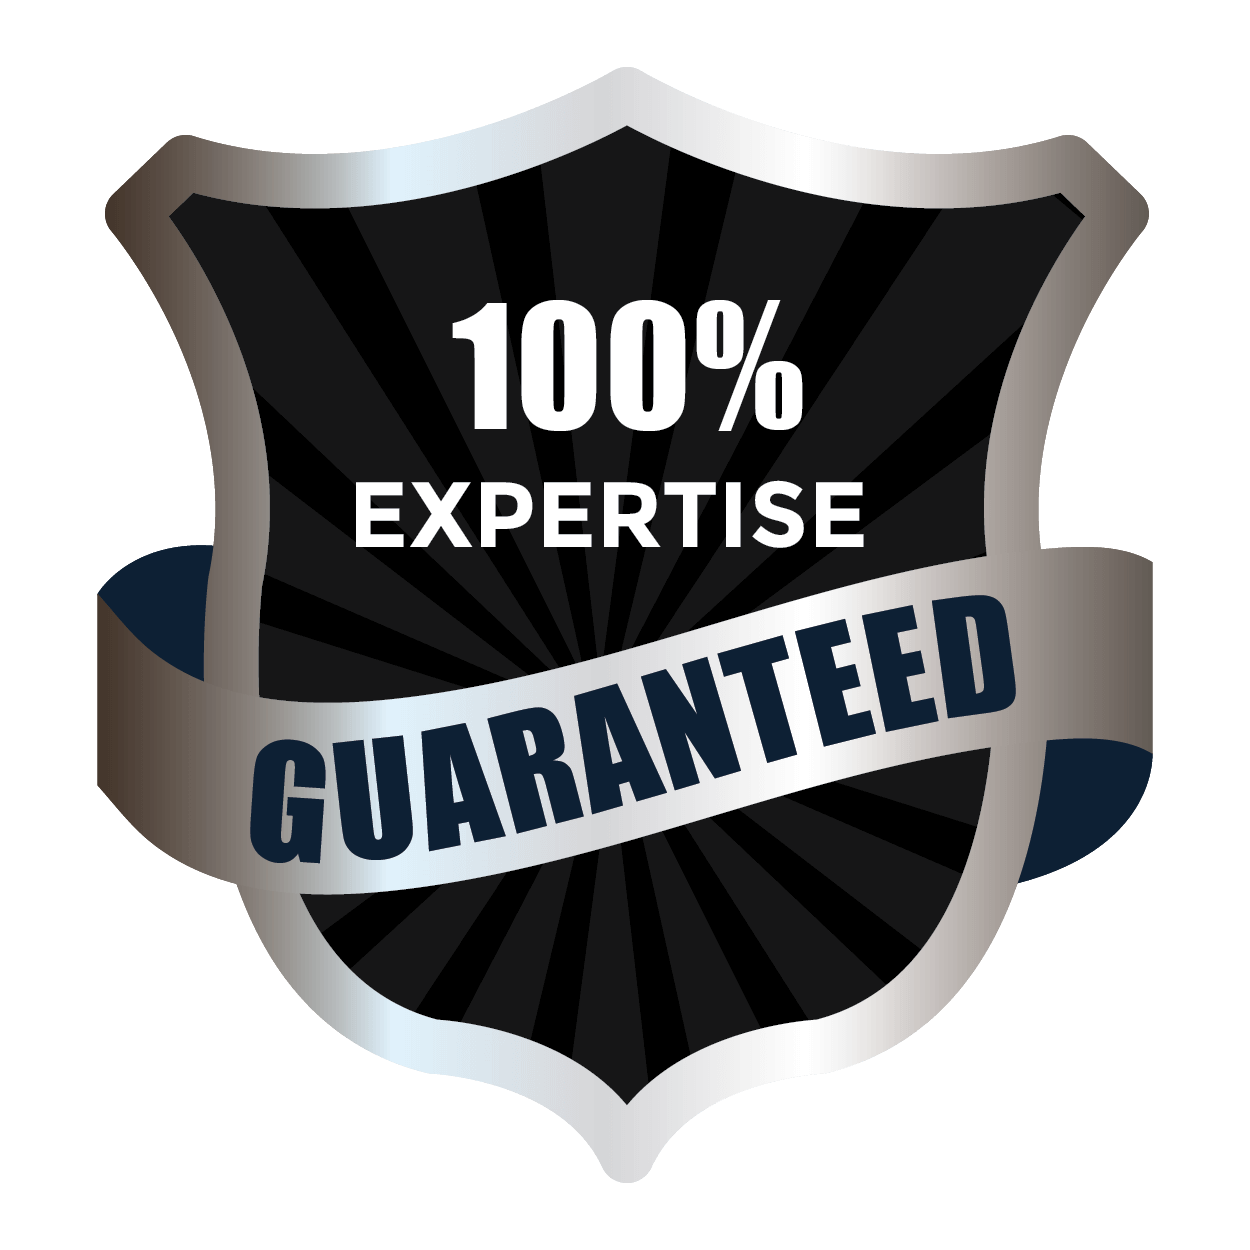 100% expertise guaranteed badge